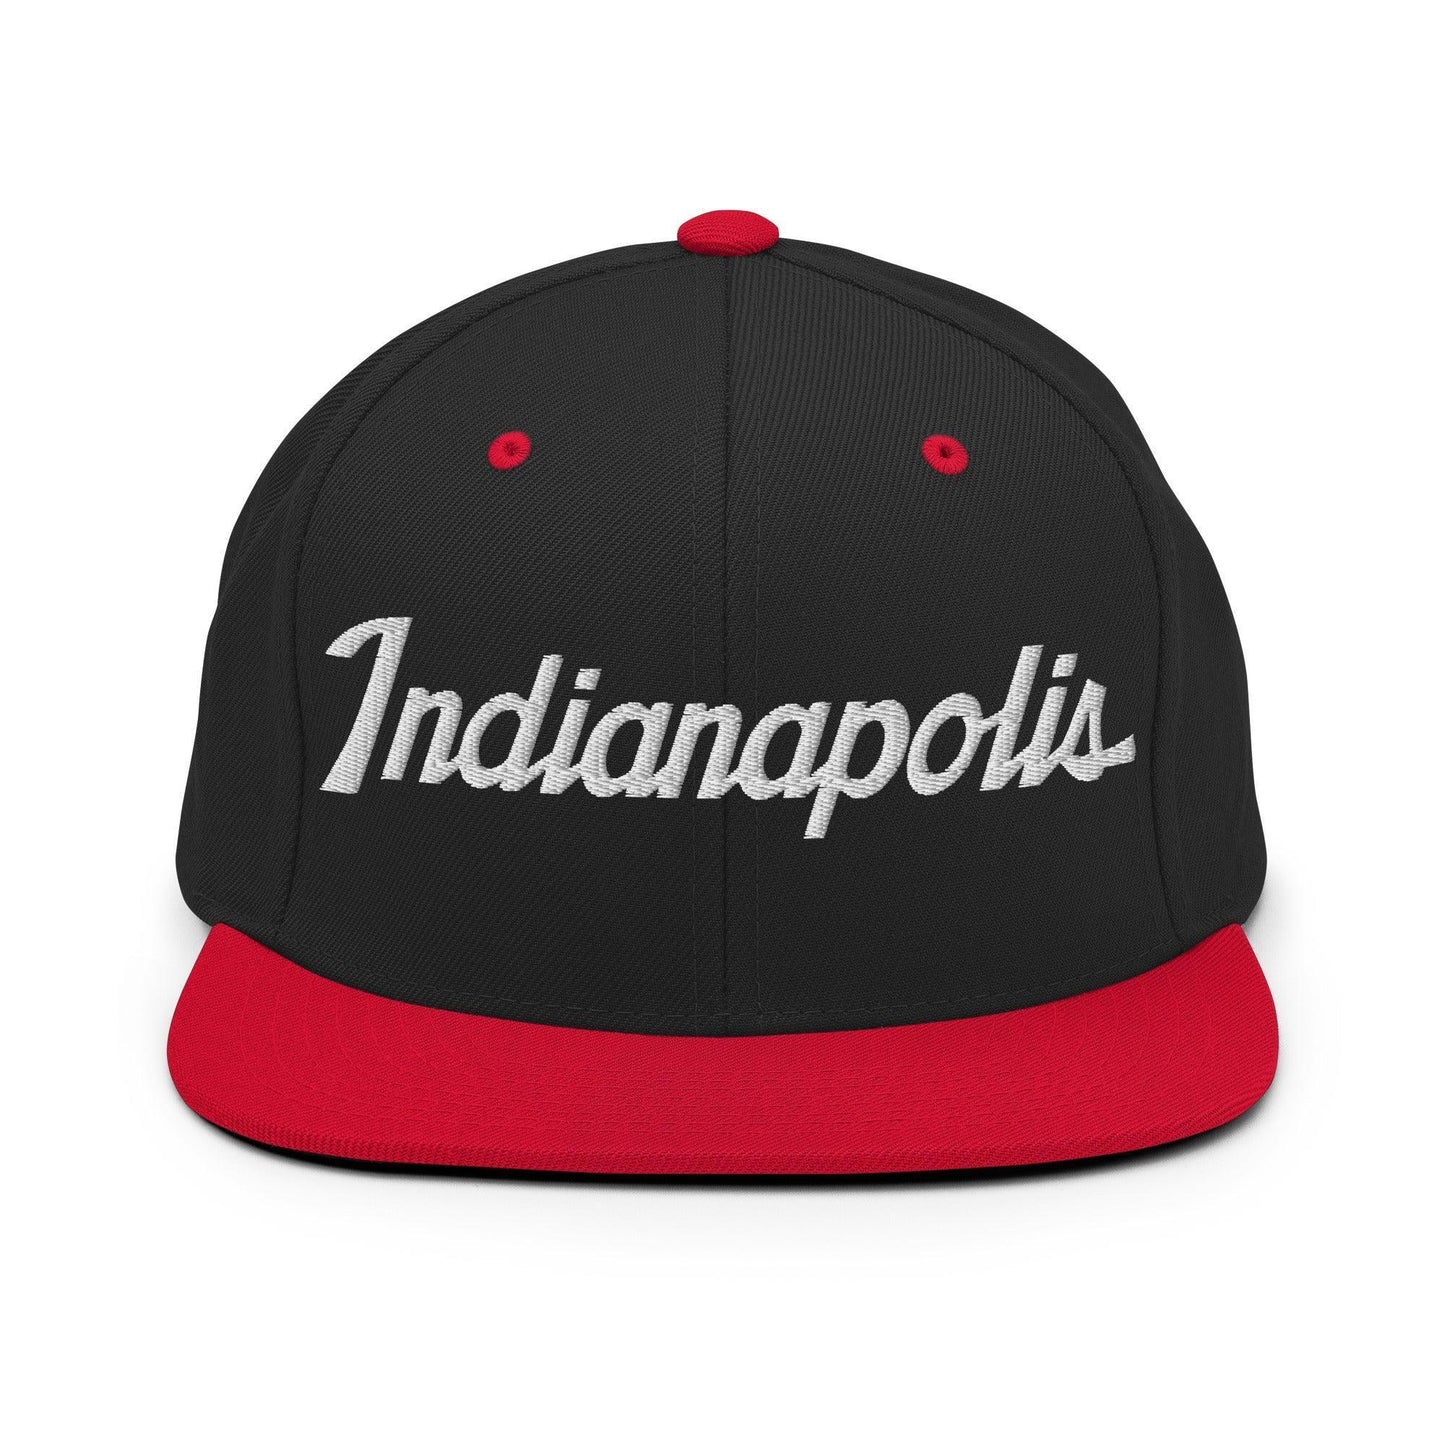 Indianapolis Script Snapback Hat Black Red